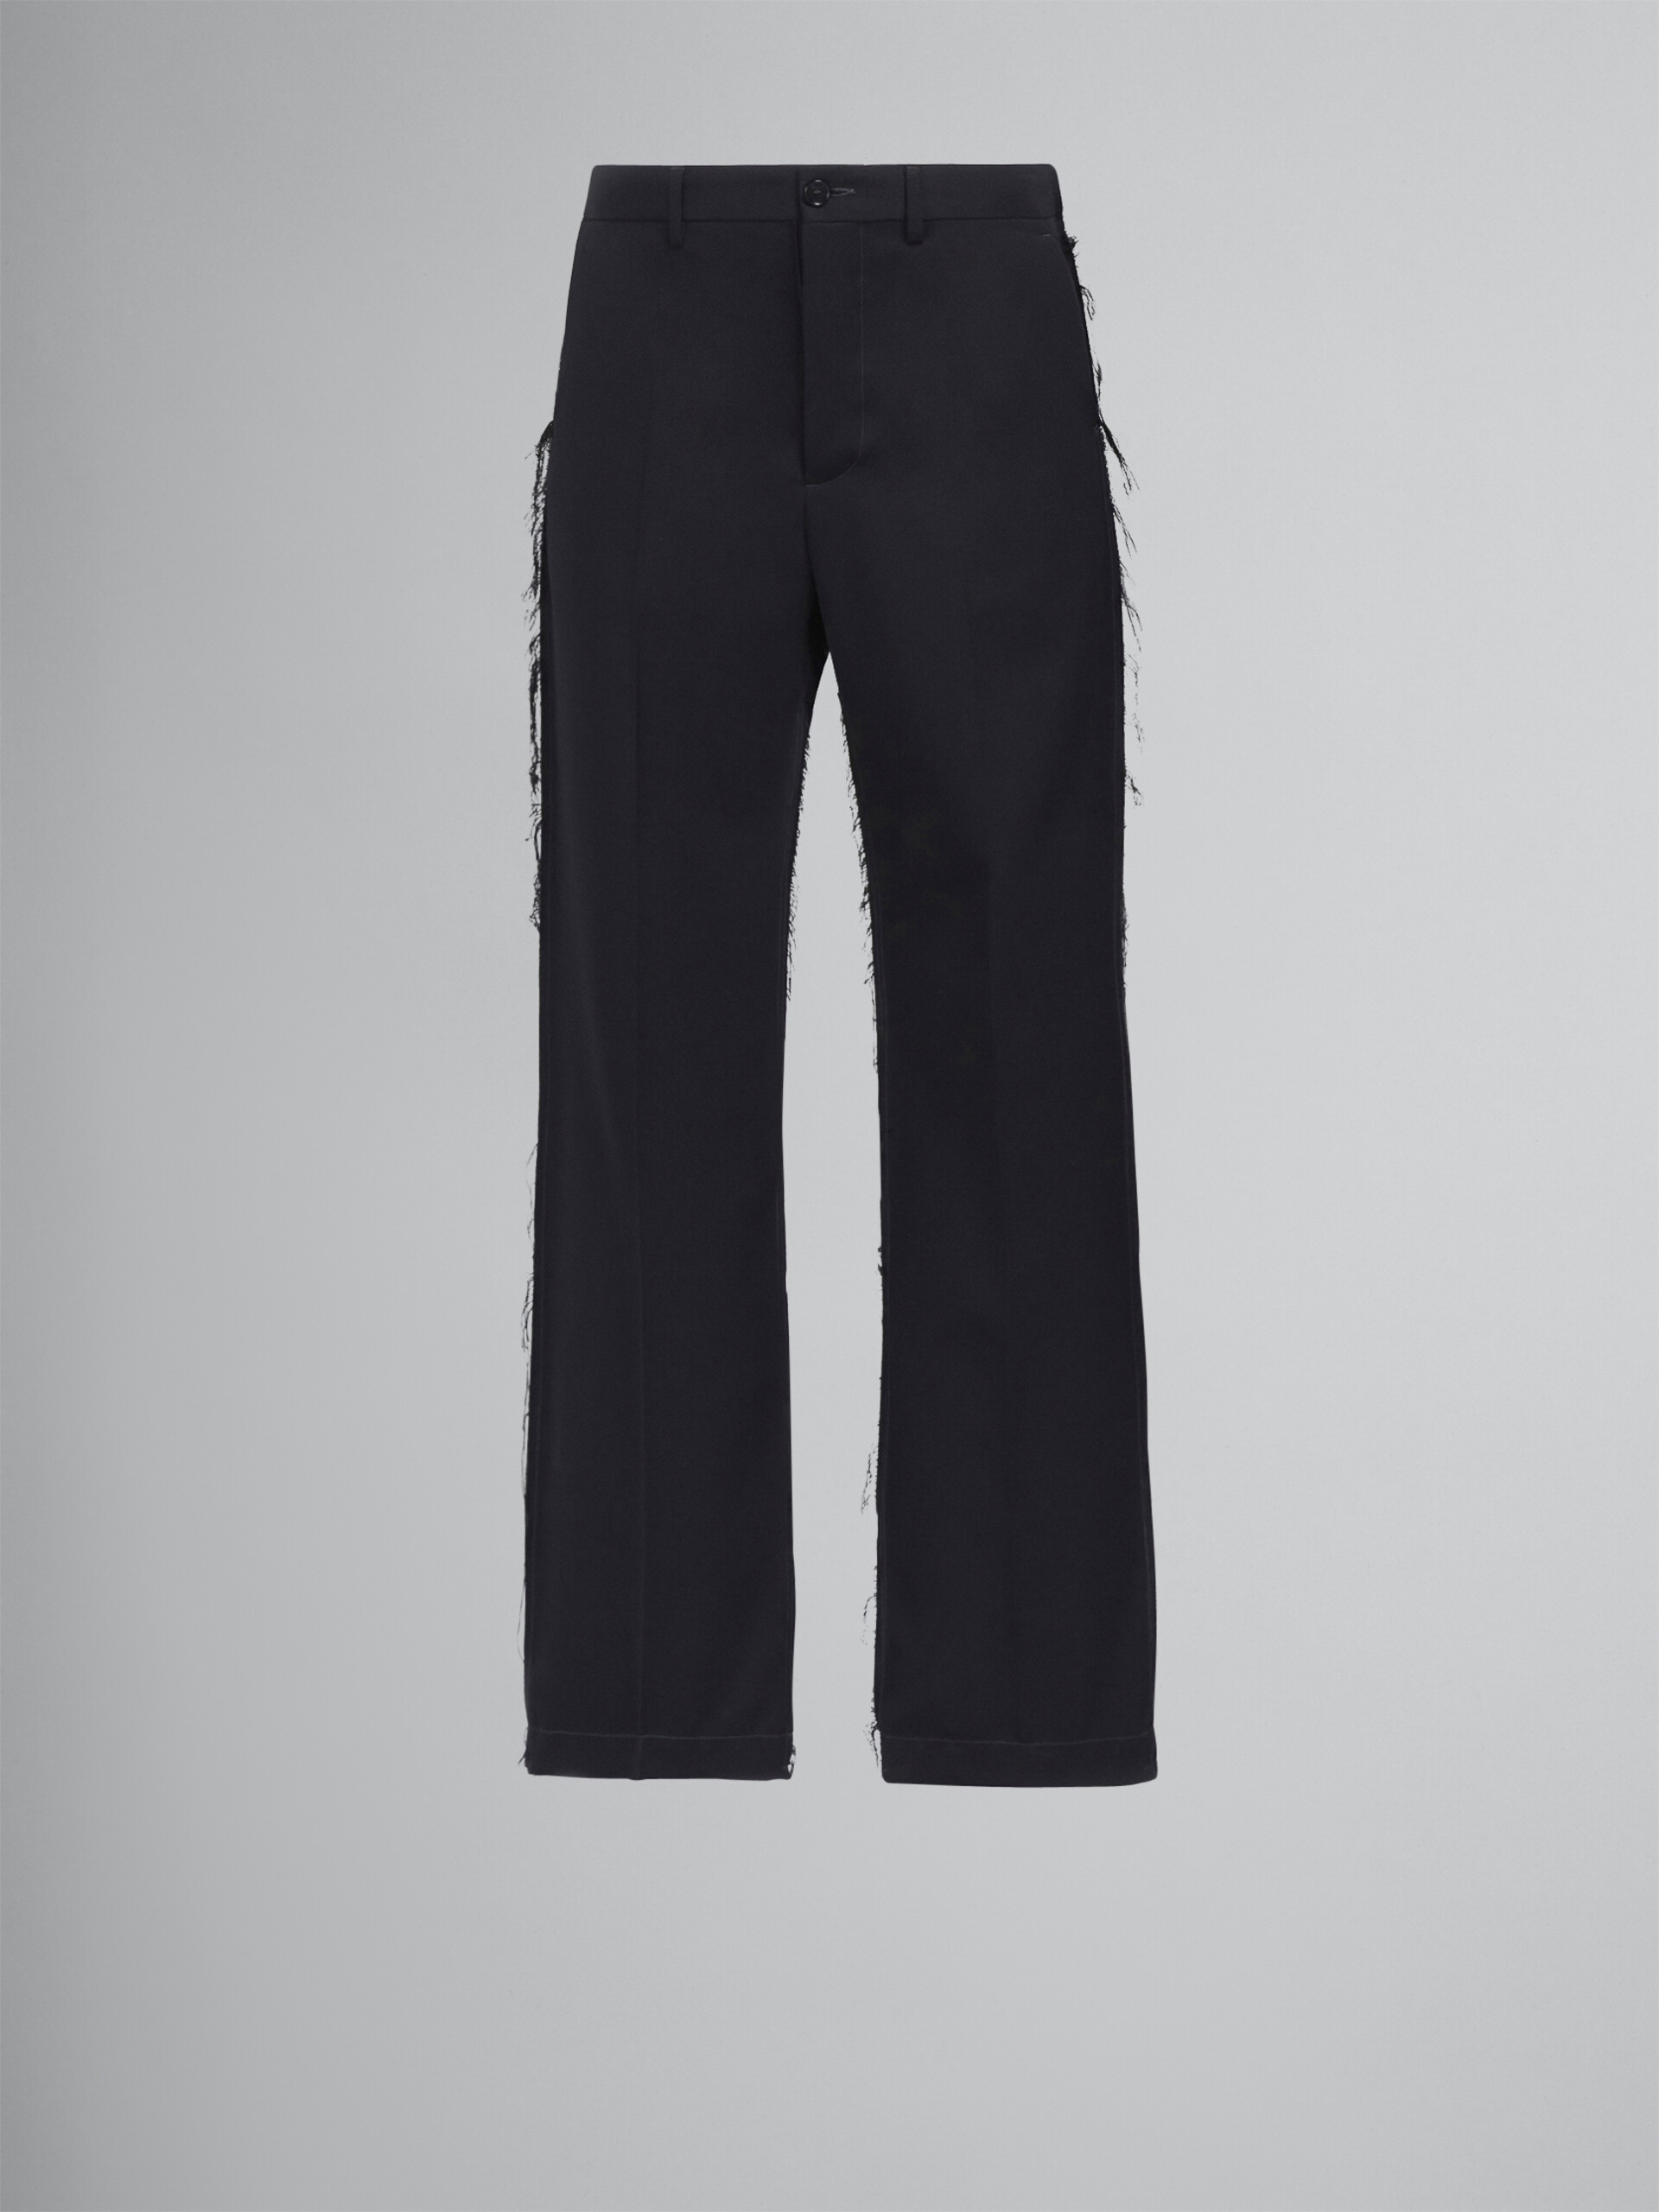 Black gabardine wool pants - Pants - Image 1